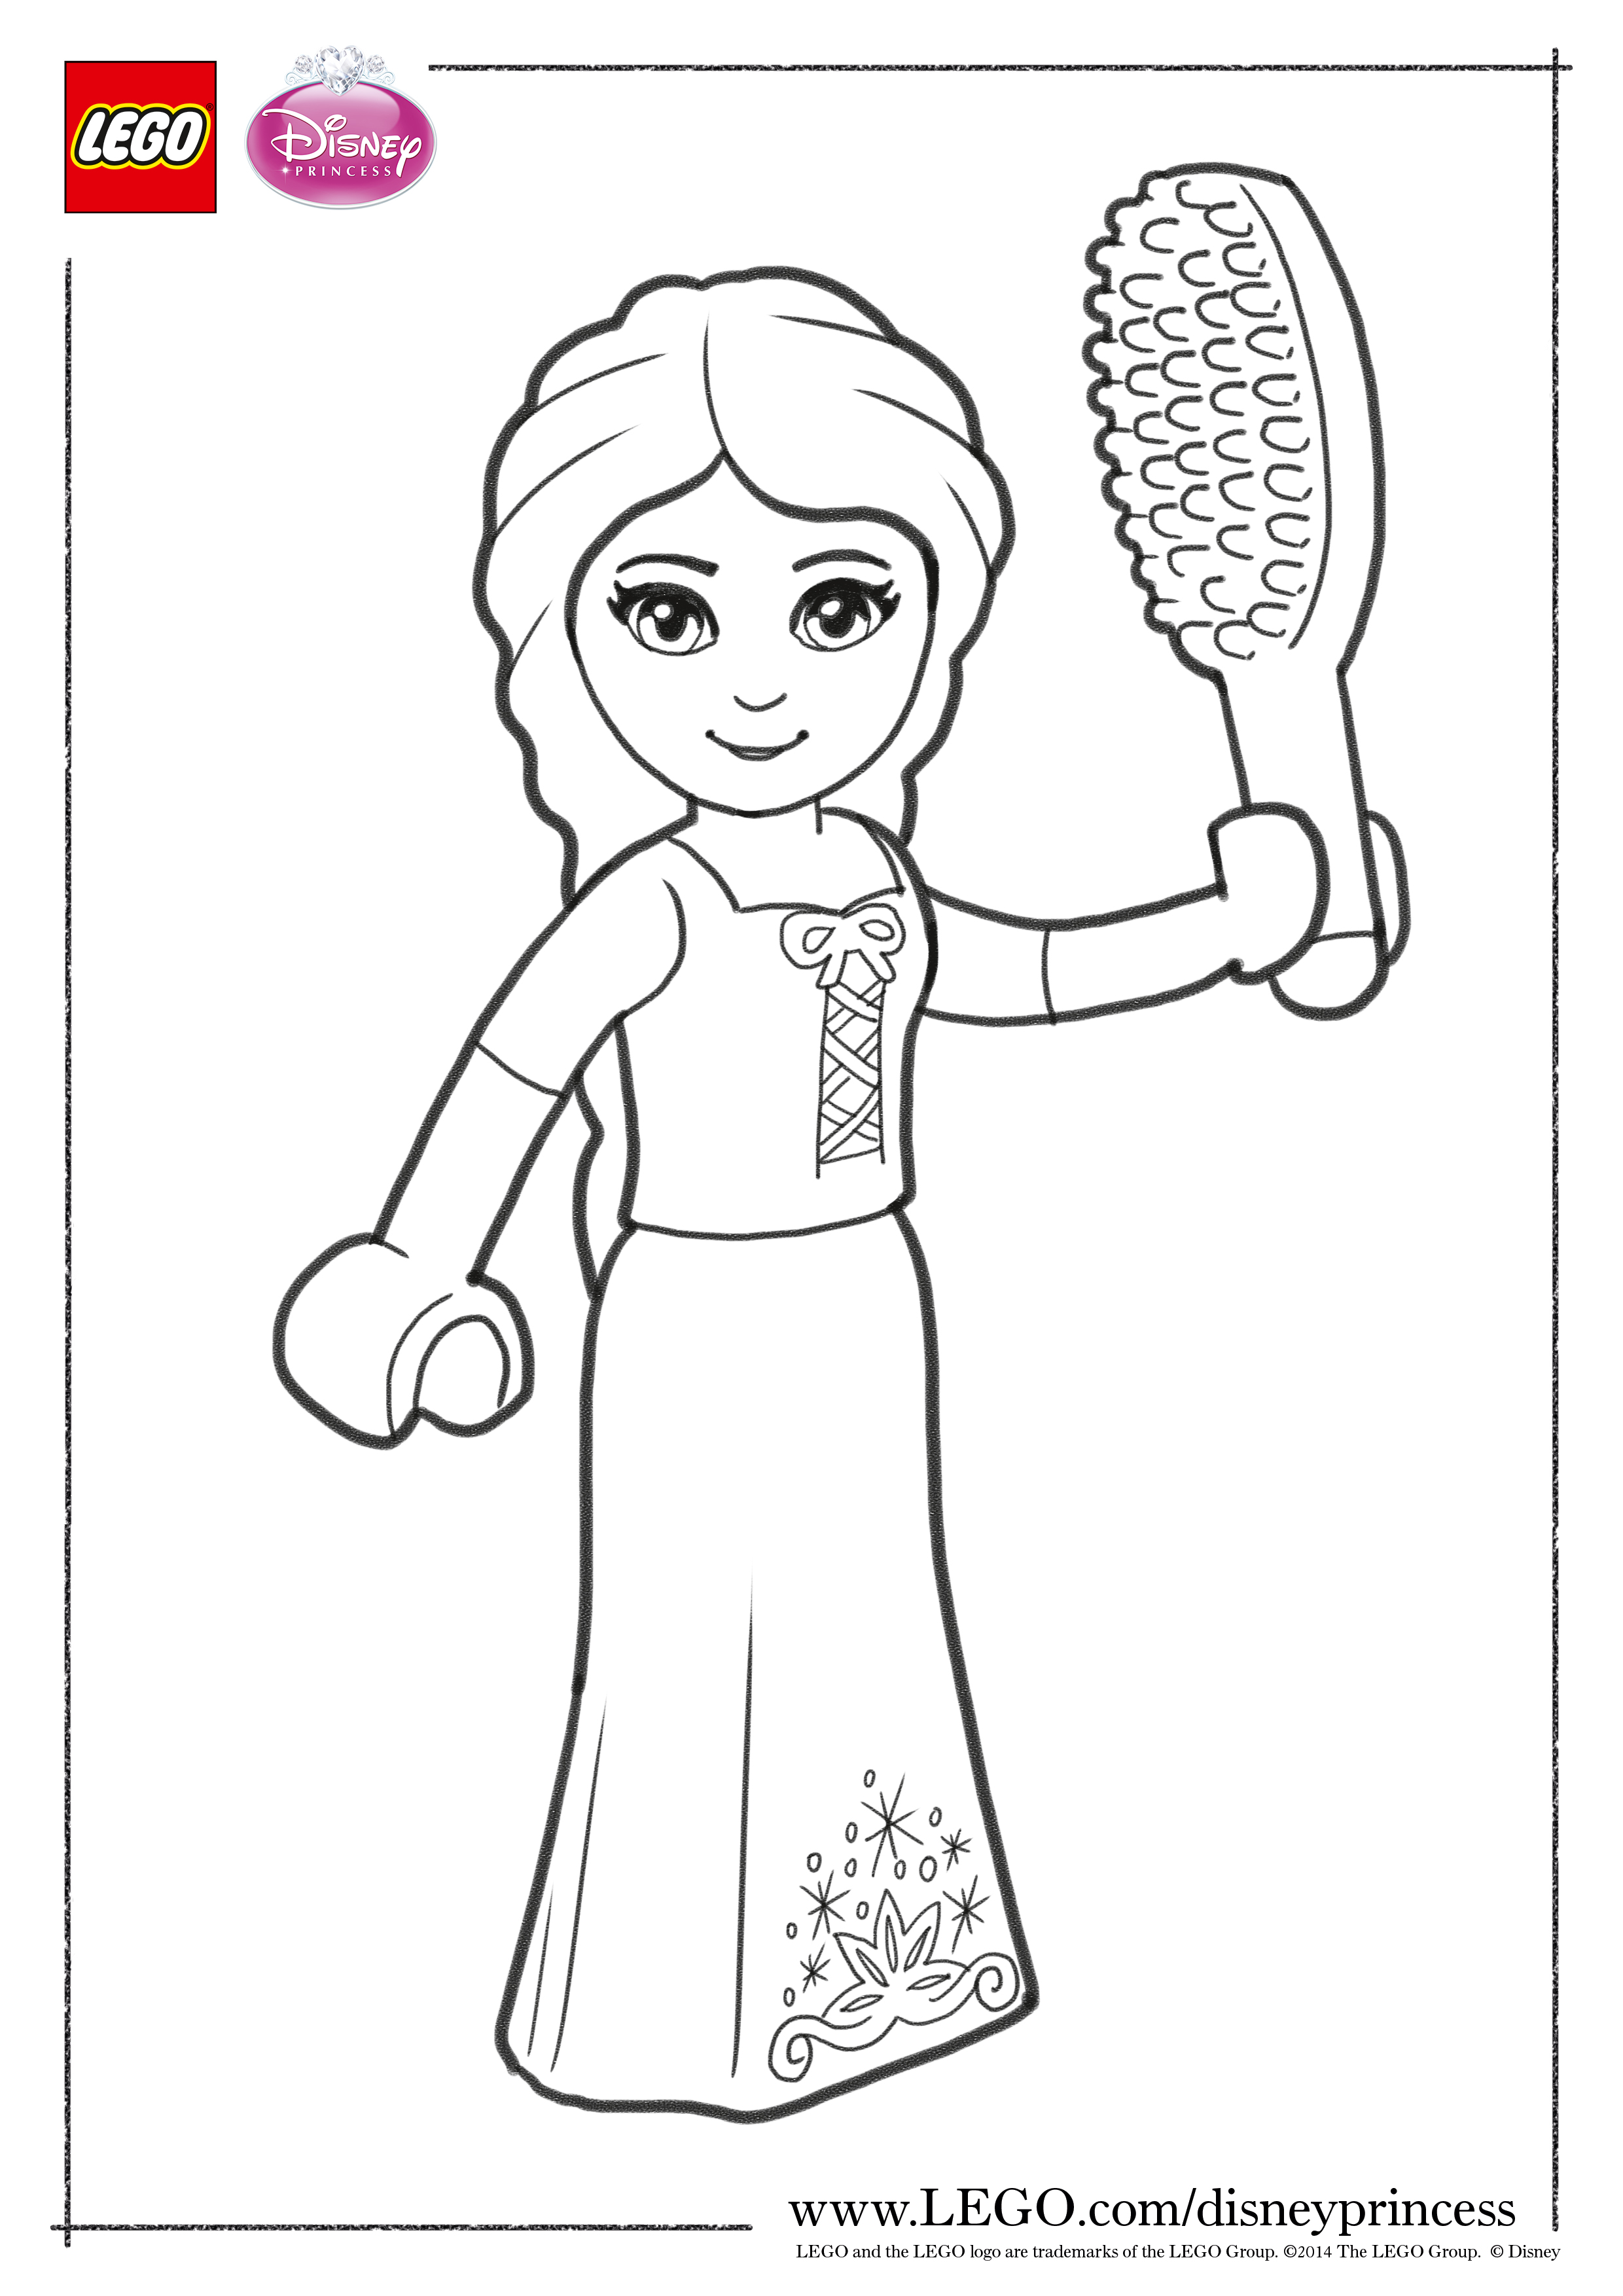 Lego disney princess coloring pages